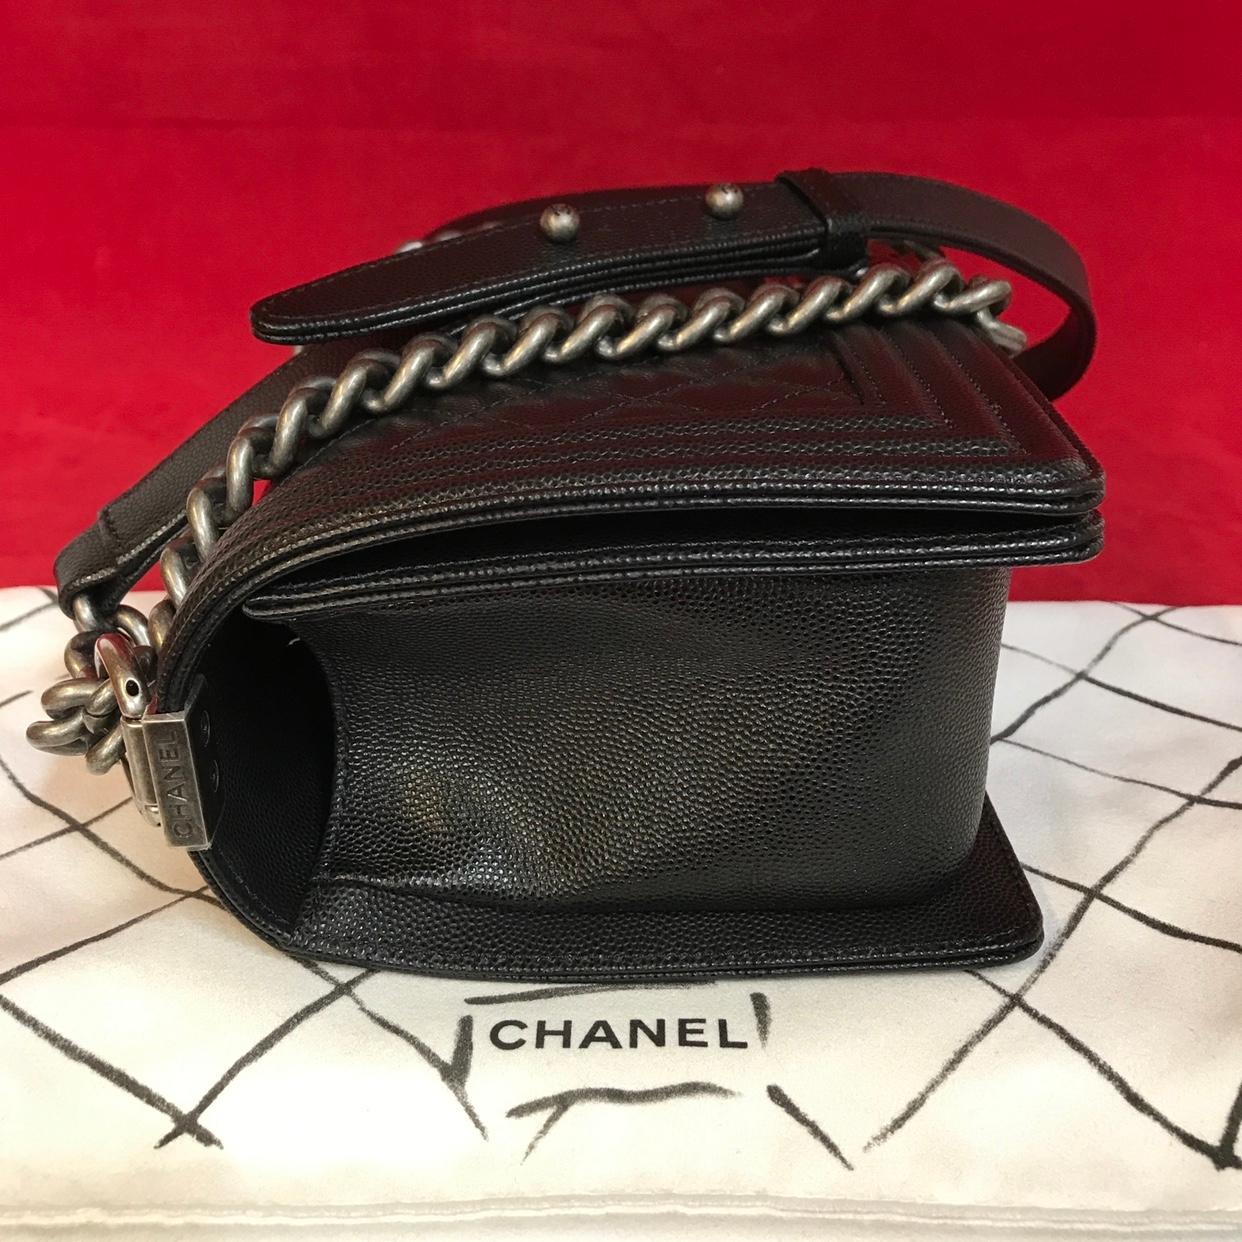 CHANEL A67086 Boy Medium shoulder bag black quilted caviar / calfskin 2018 In Excellent Condition For Sale In Berlin, DE